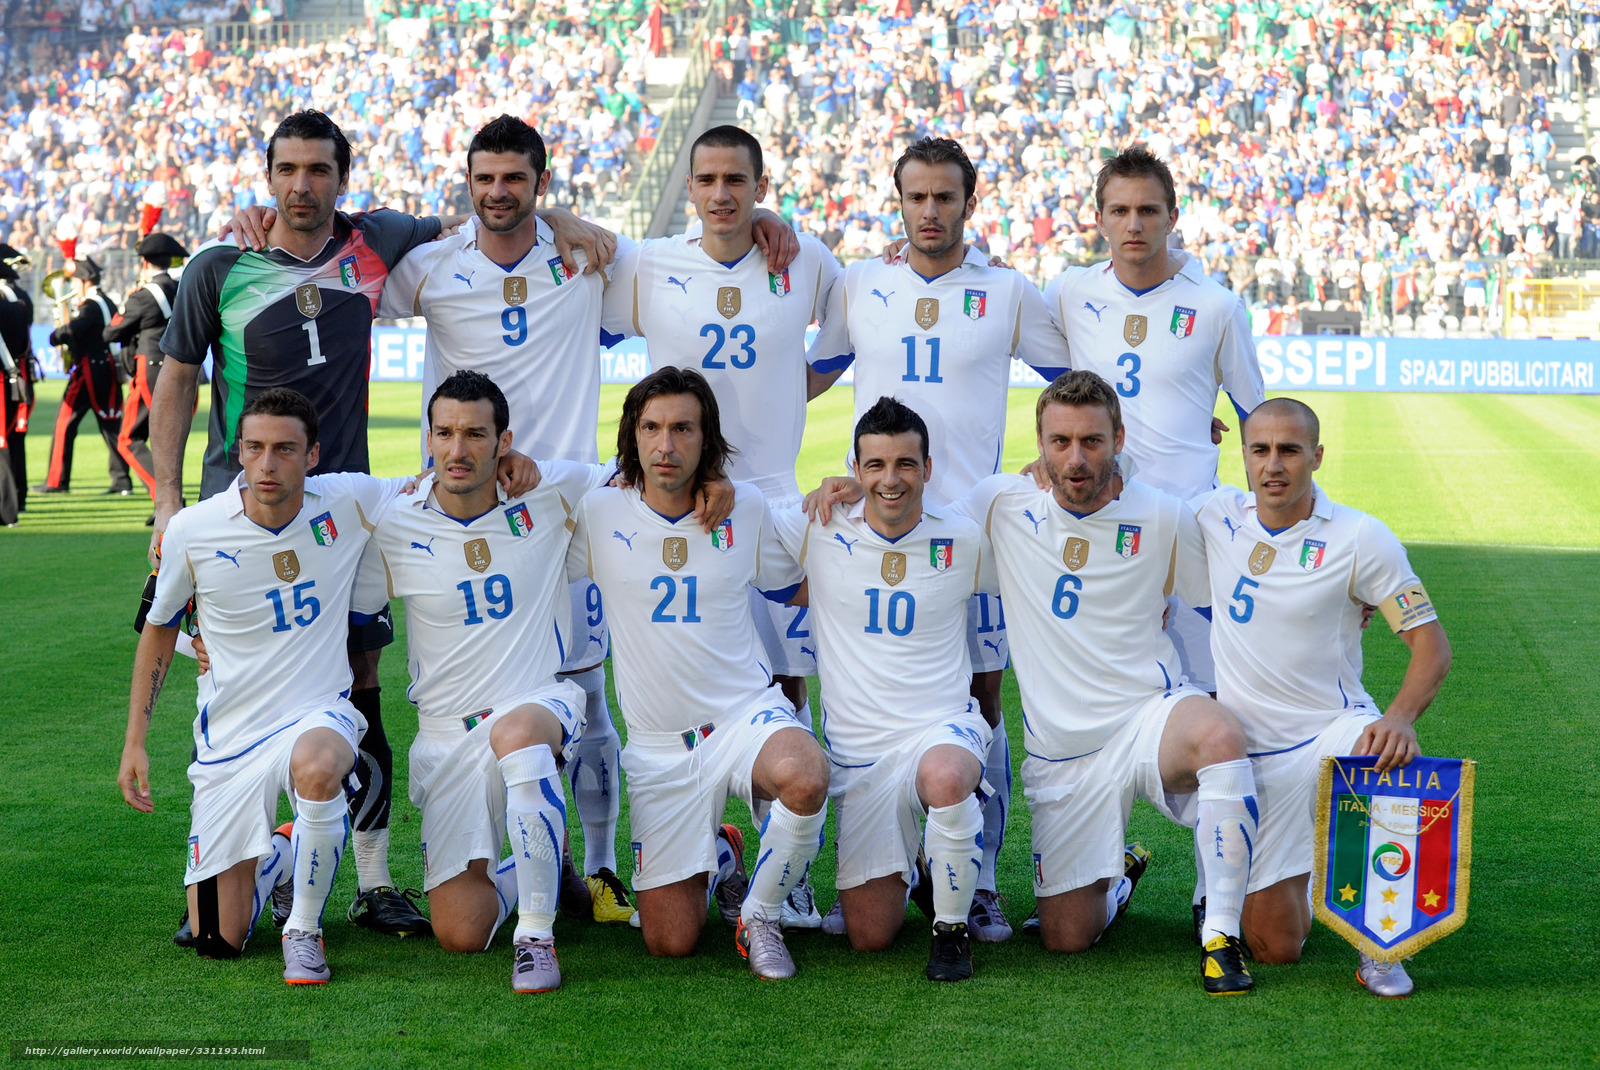 Download wallpaper Italy national football team free desktop wallpaper in the resolution 3000x2006